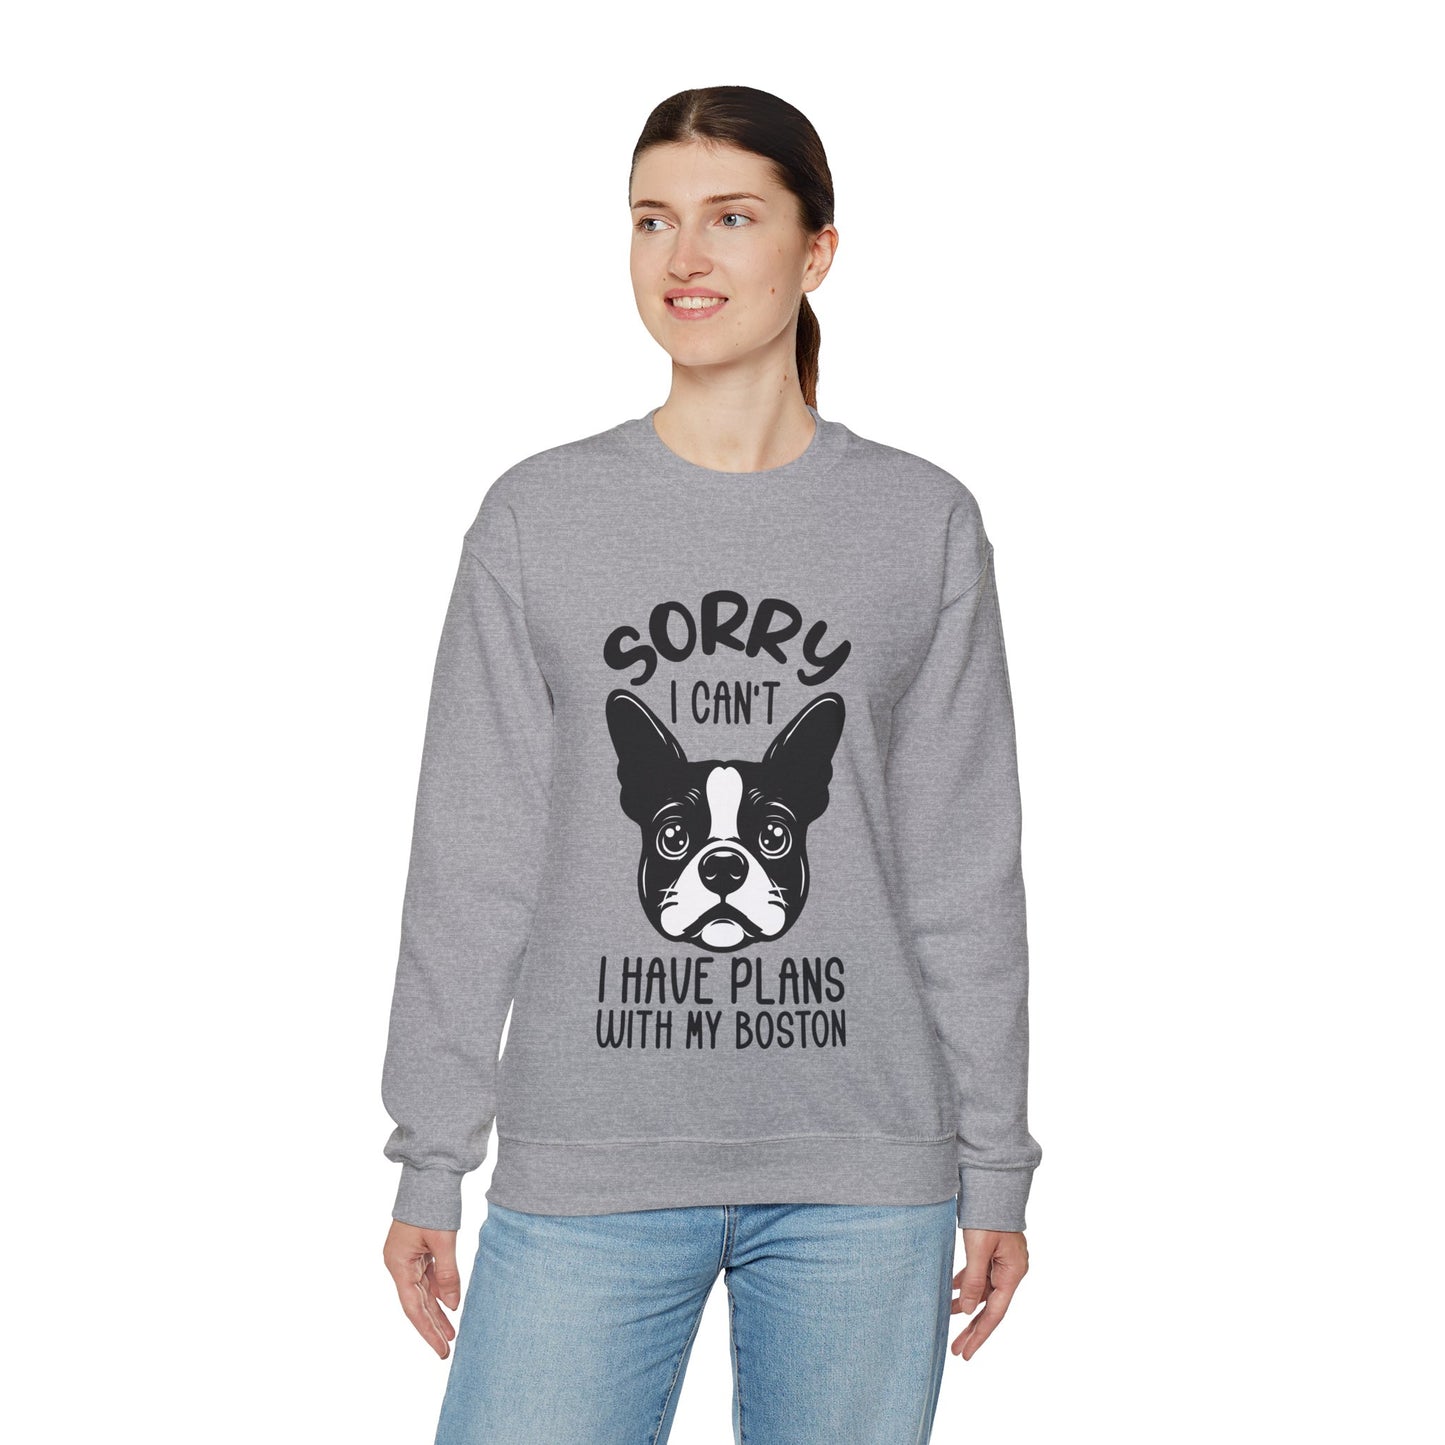 Bullet  - Unisex Sweatshirt for Boston Terrier lovers